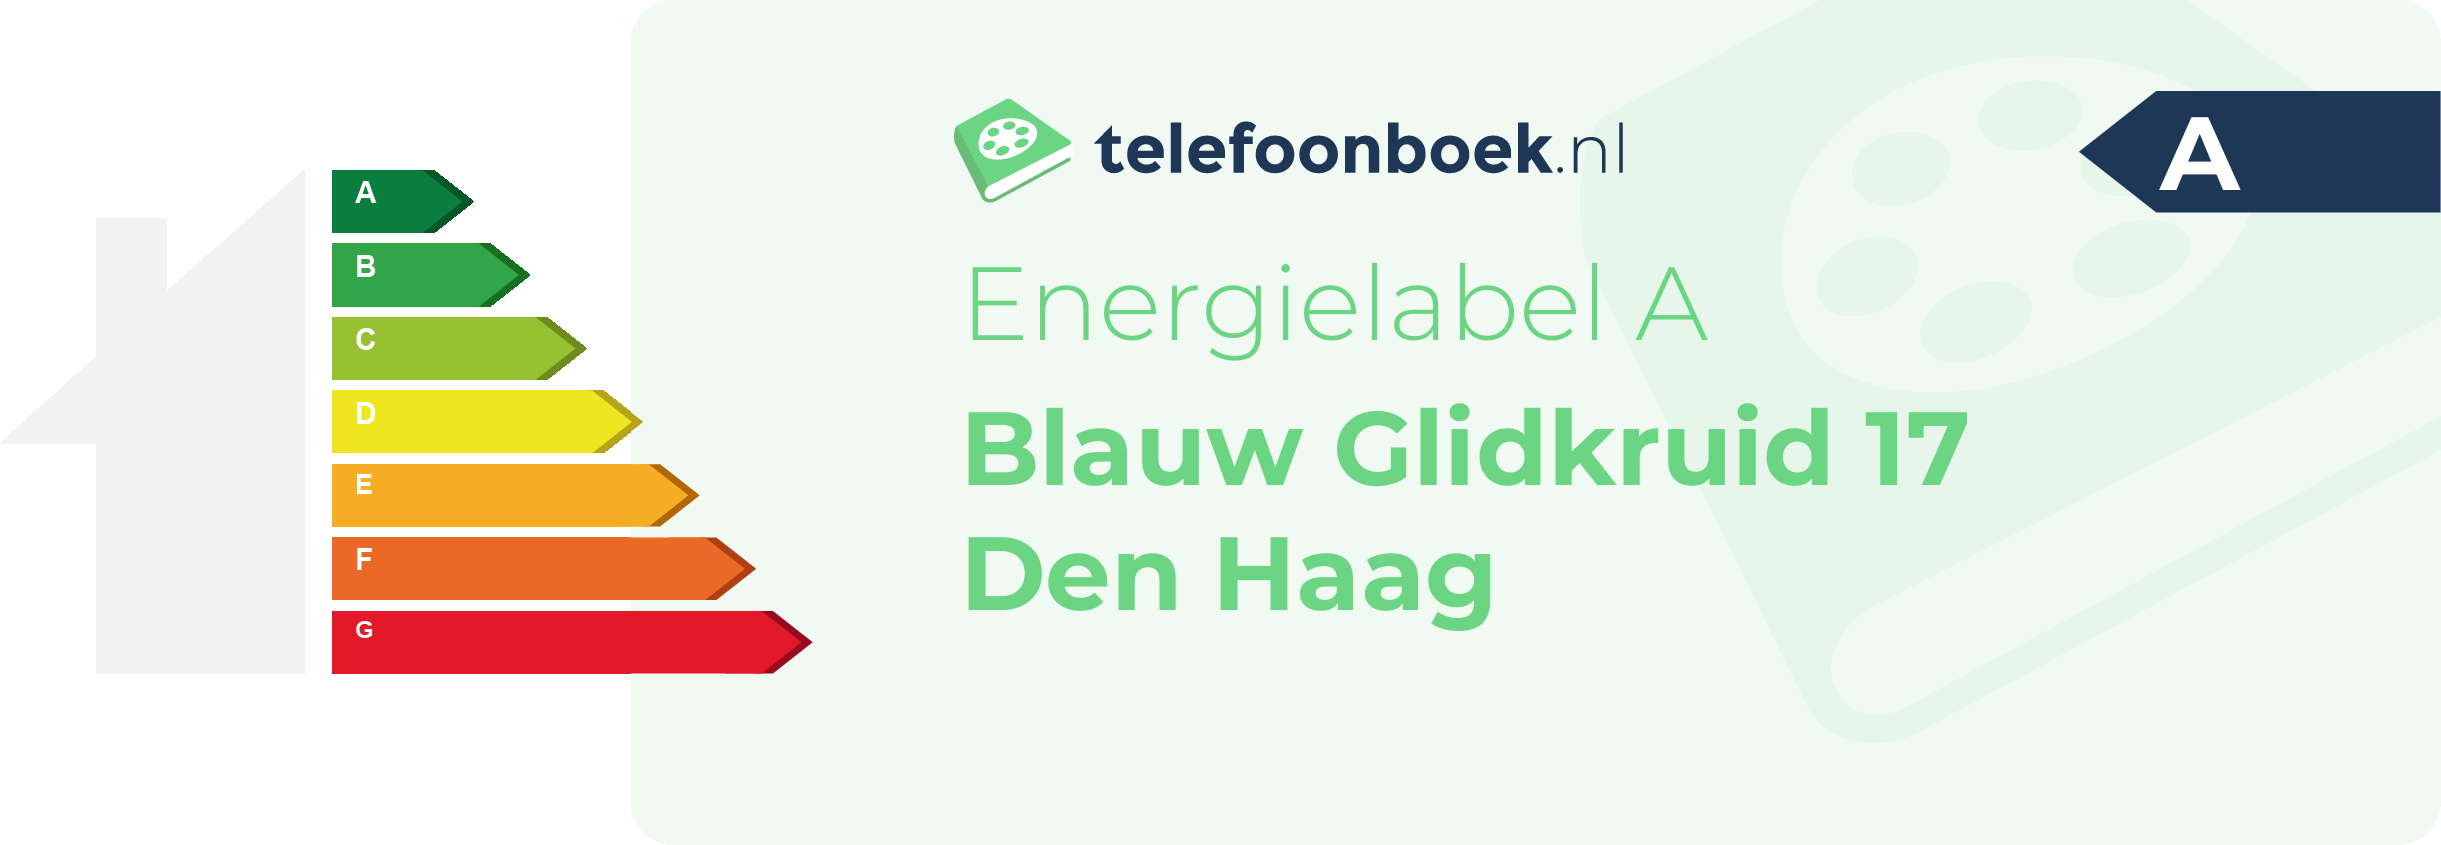 Energielabel Blauw Glidkruid 17 Den Haag